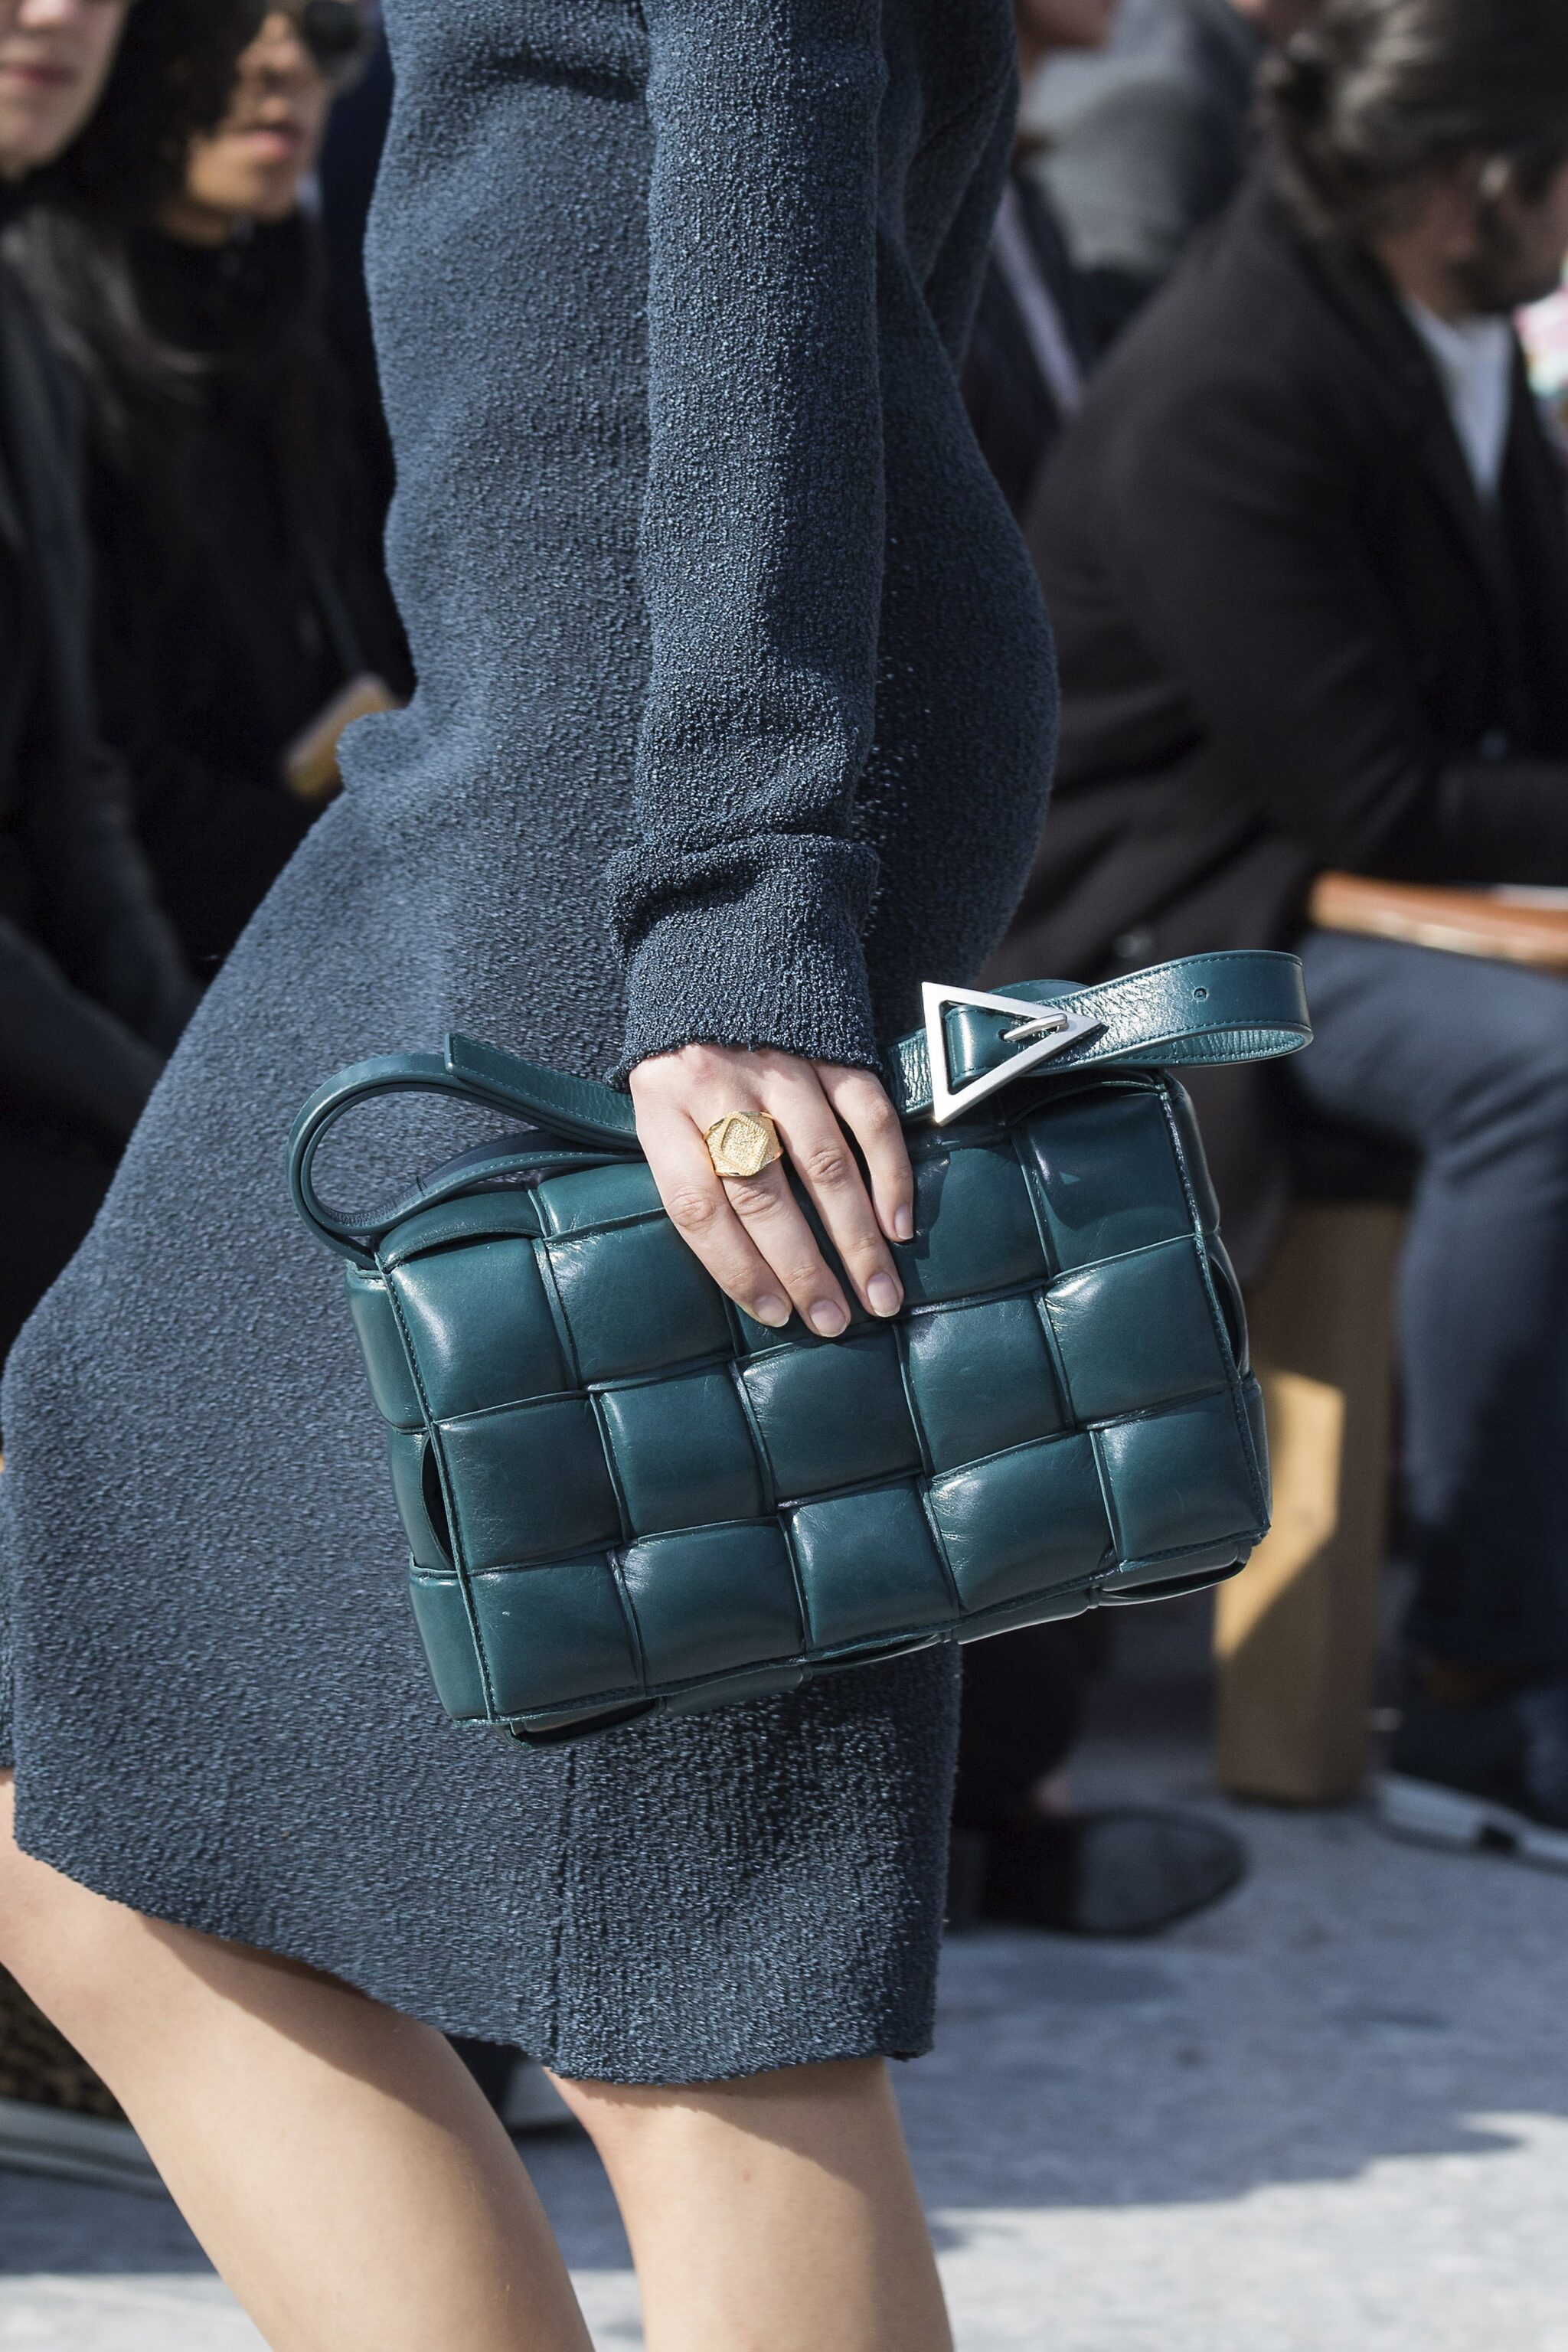 Bottega Veneta's Mini Jodie the Next It' Bag - Spotted Fashion